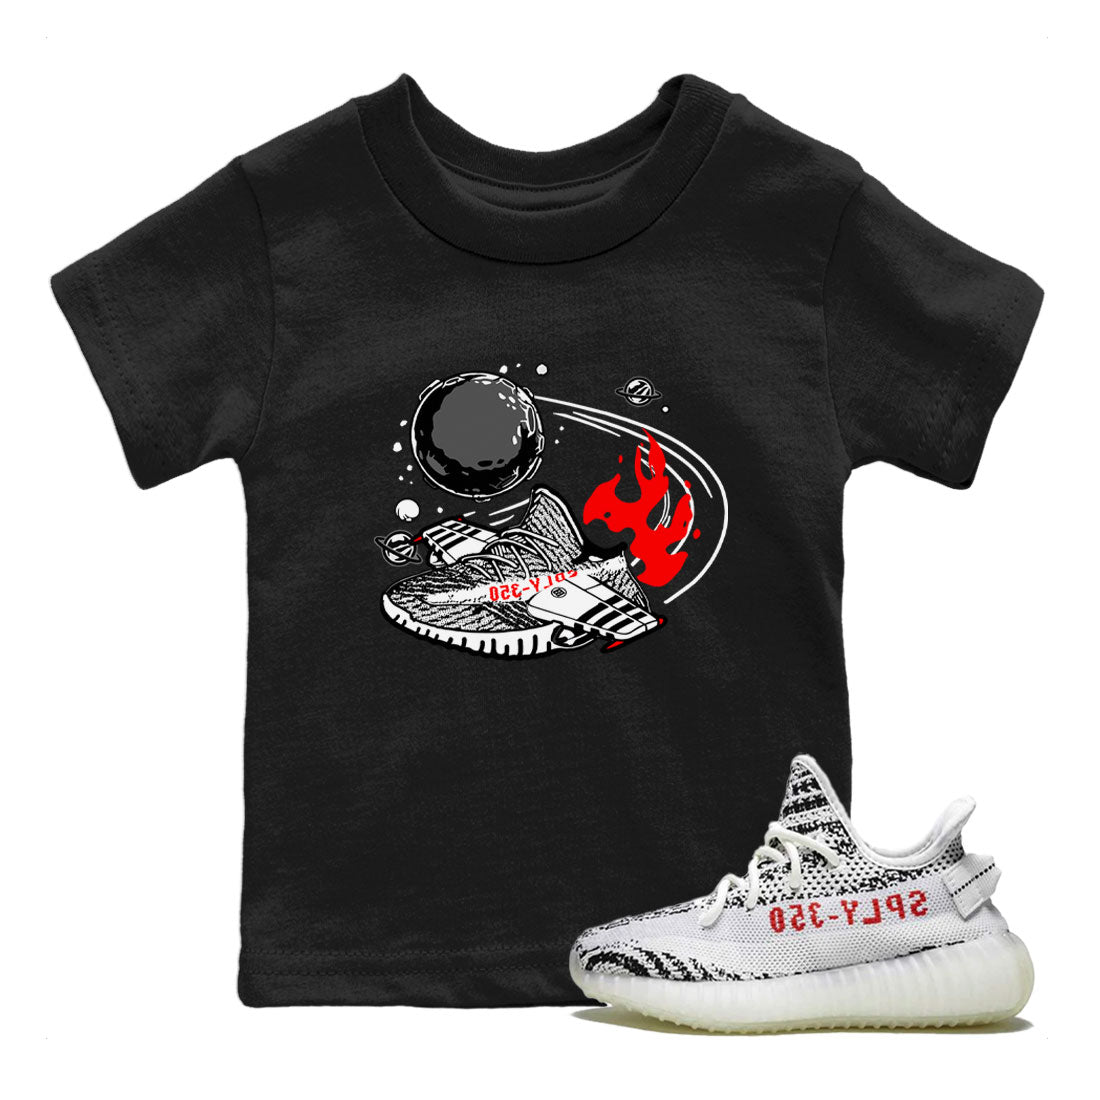 Yeezy 350 Zebra shirt to match Yeezys Rocket Boost Streetwear Sneaker Shirt Yeezy Boost 350 V2 Zebra Drip Gear Zone Sneaker Matching Clothing Baby Toddler Black 1 T-Shirt